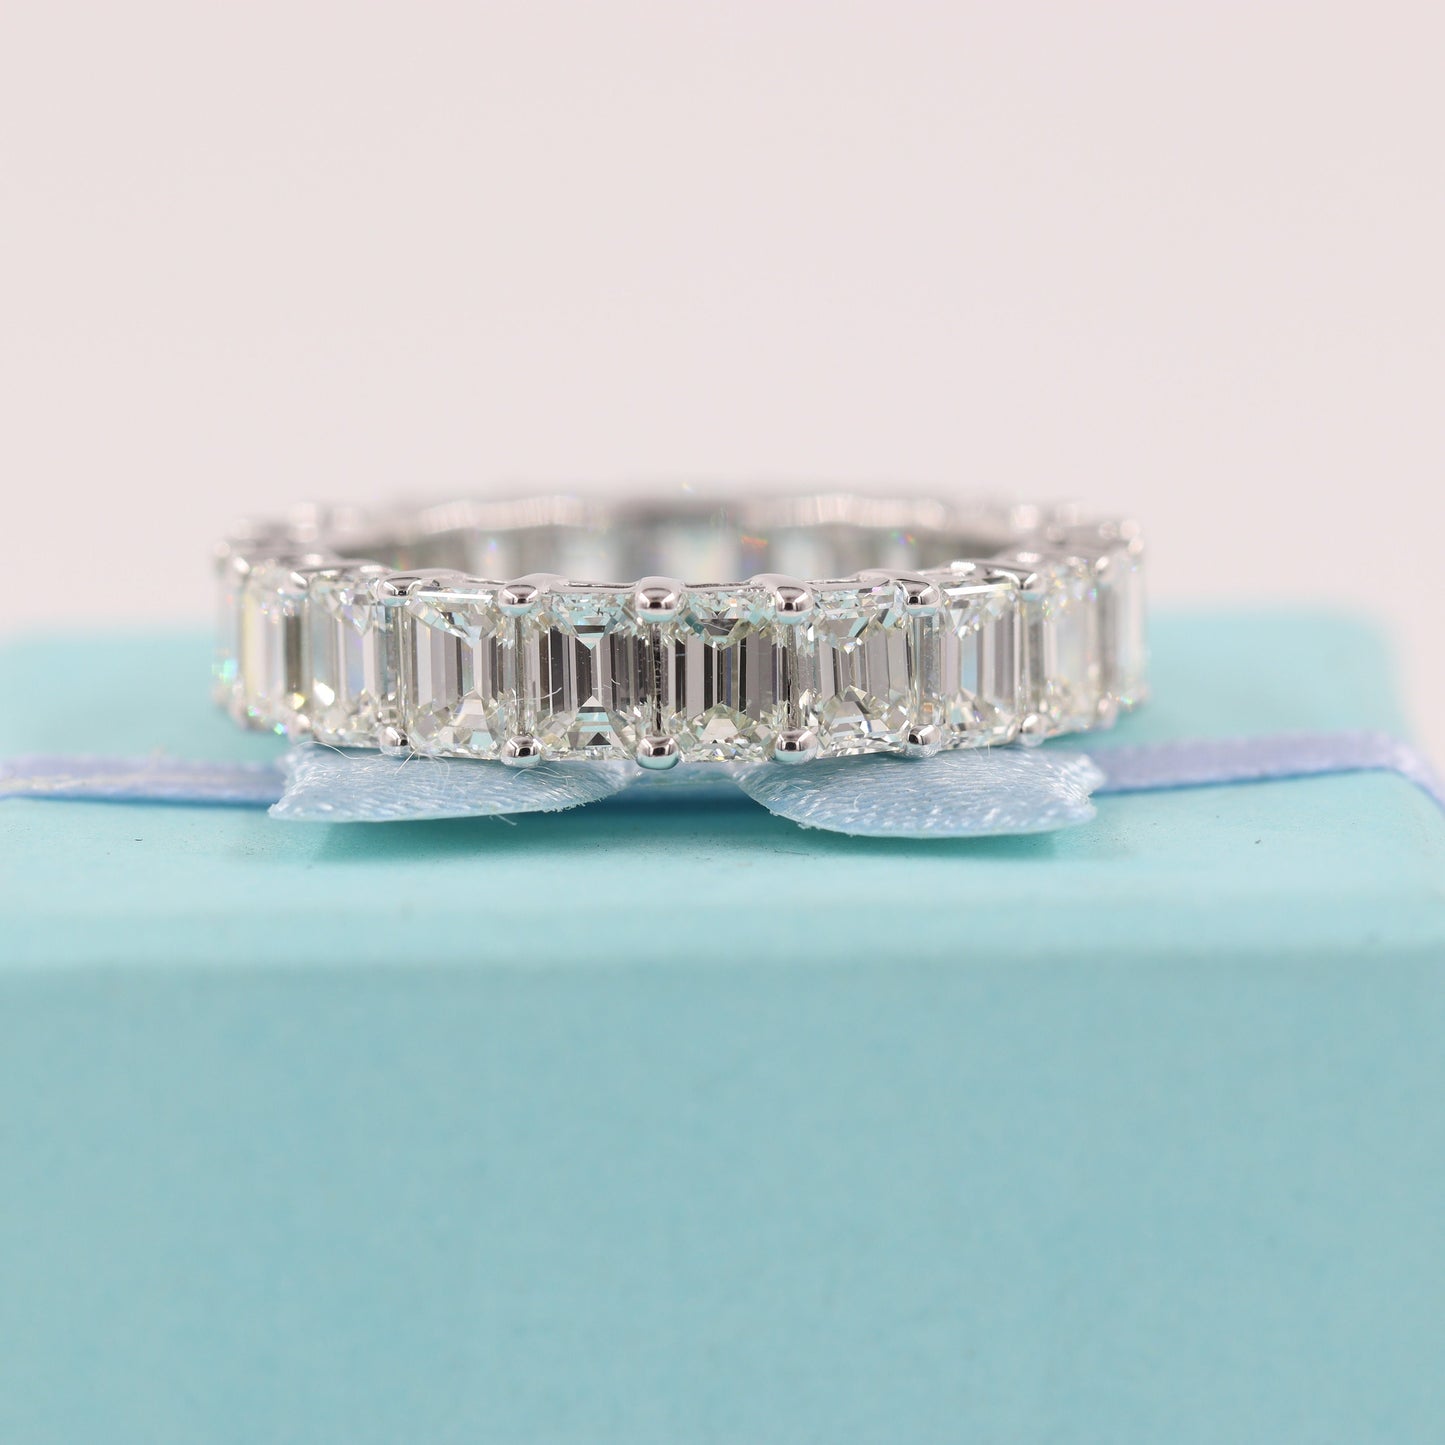 7ct Emerald Cut Diamond Width 5mm/Emerald Cut Diamond Wedding Band/Full Eternity Wedding Ring/Natural Diamond/Anniversary gift